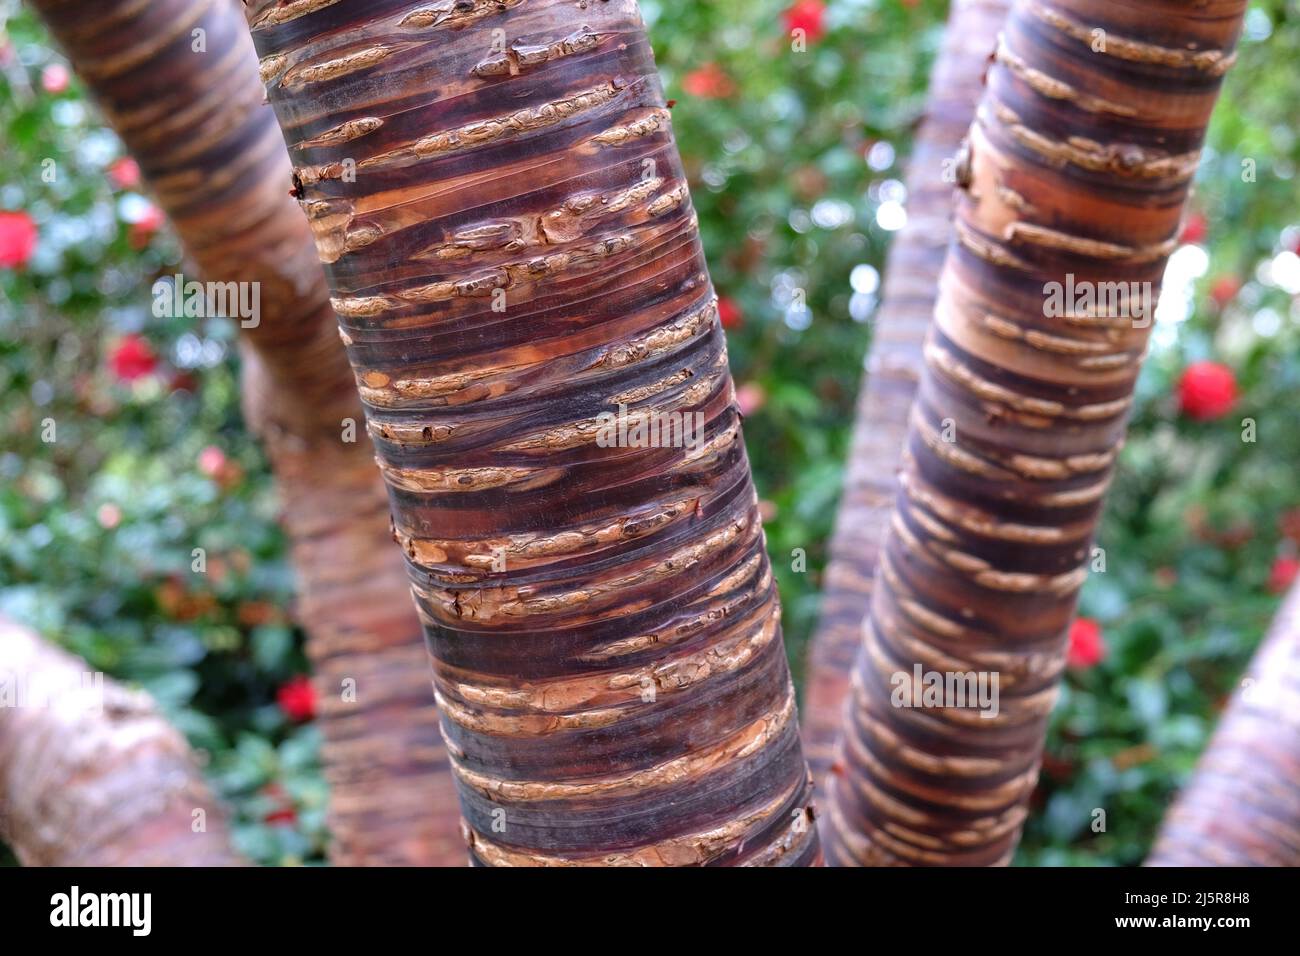 Striped Bark of Prunus serial x serrulata Tree, or the Japanese and Tibetan Cherry. Stock Photo